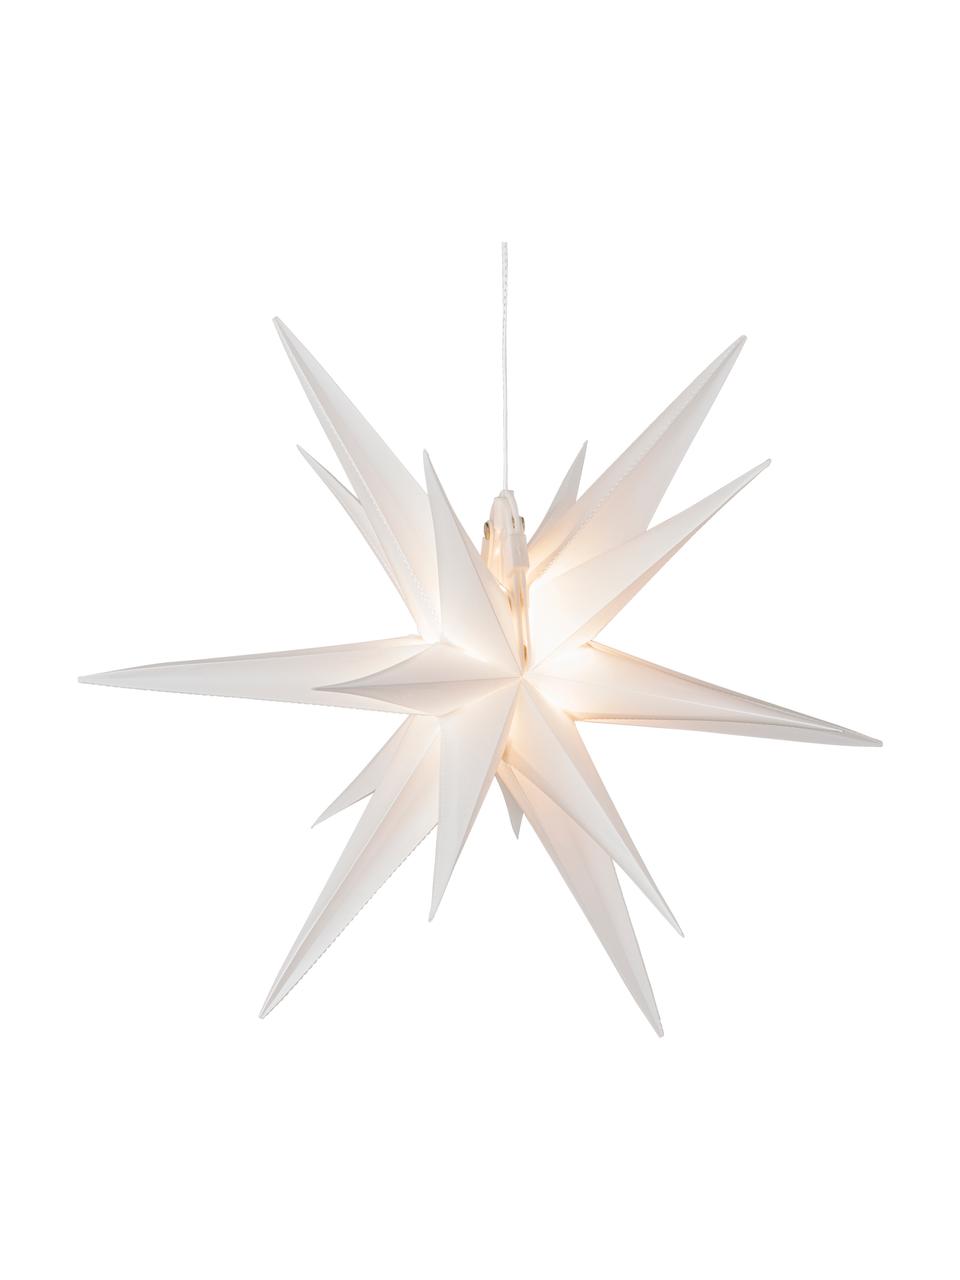 LED Leuchtstern Zing, Kunststoff, Weiß, B 40 x H 40 cm